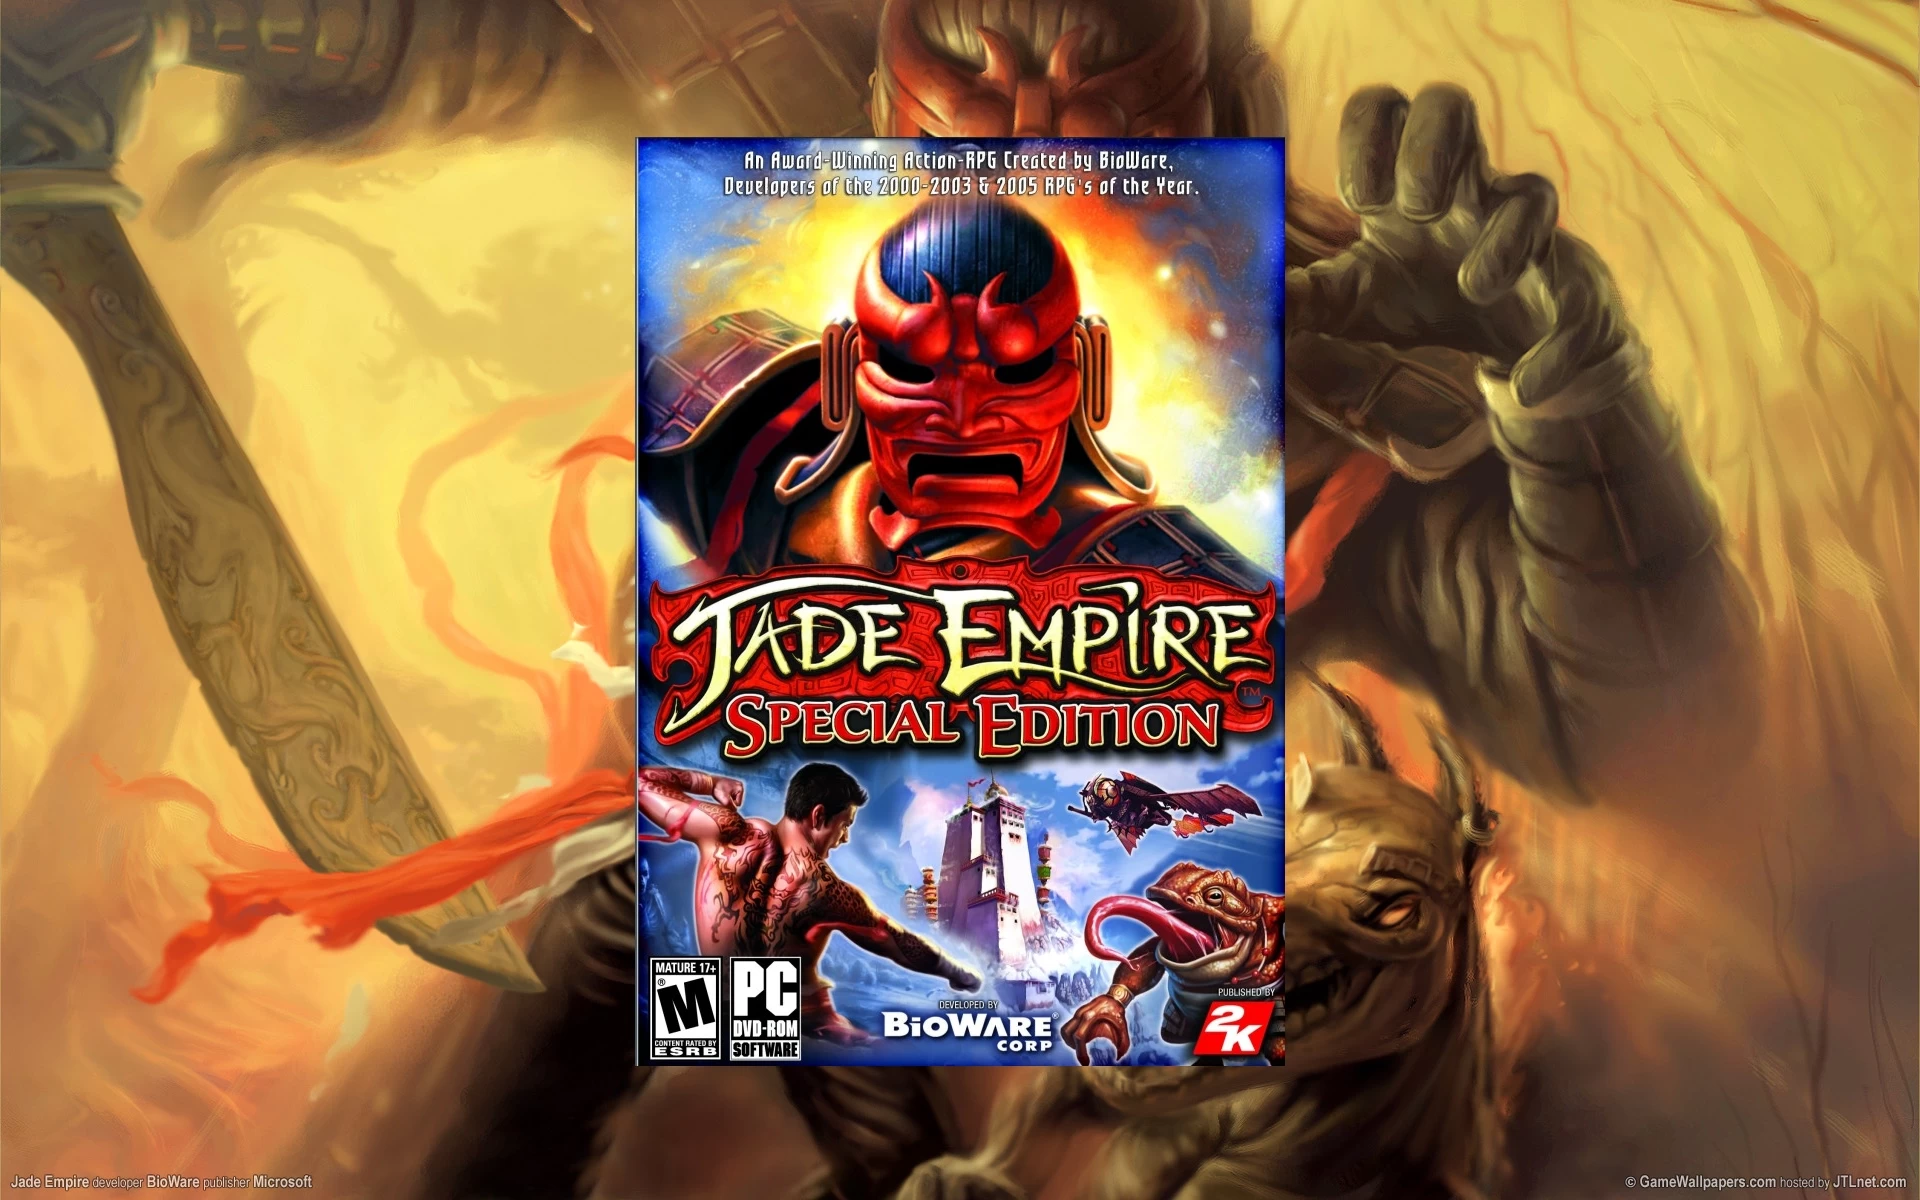 jade empire special edition | เกมแจกฟรี | EA แจกฟรี! เกมในตำนานประมาณ 10 ปีก่อน 'Jade empire special edition' เกมตัวเต็มเวอร์ชั่น PC เปิดจำหน่ายราคา 0 บาทในเวลาจำกัด [วิธีดาวน์โหลดด้านใน]